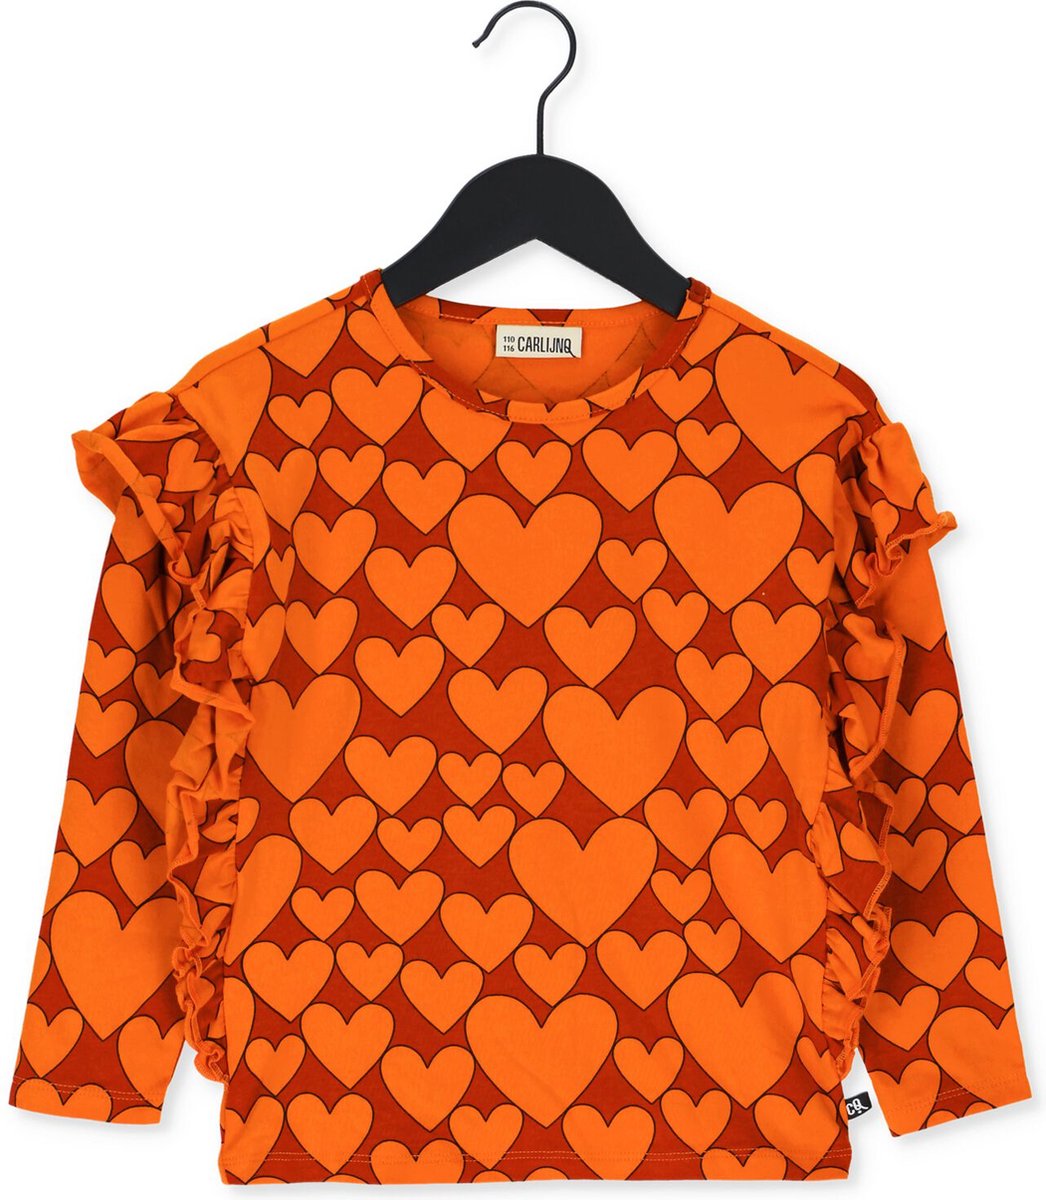 Carlijnq Hearts - Ruffled Top Longsleeve Tops & T-shirts Meisjes - Shirt - Oranje - Maat 98/104